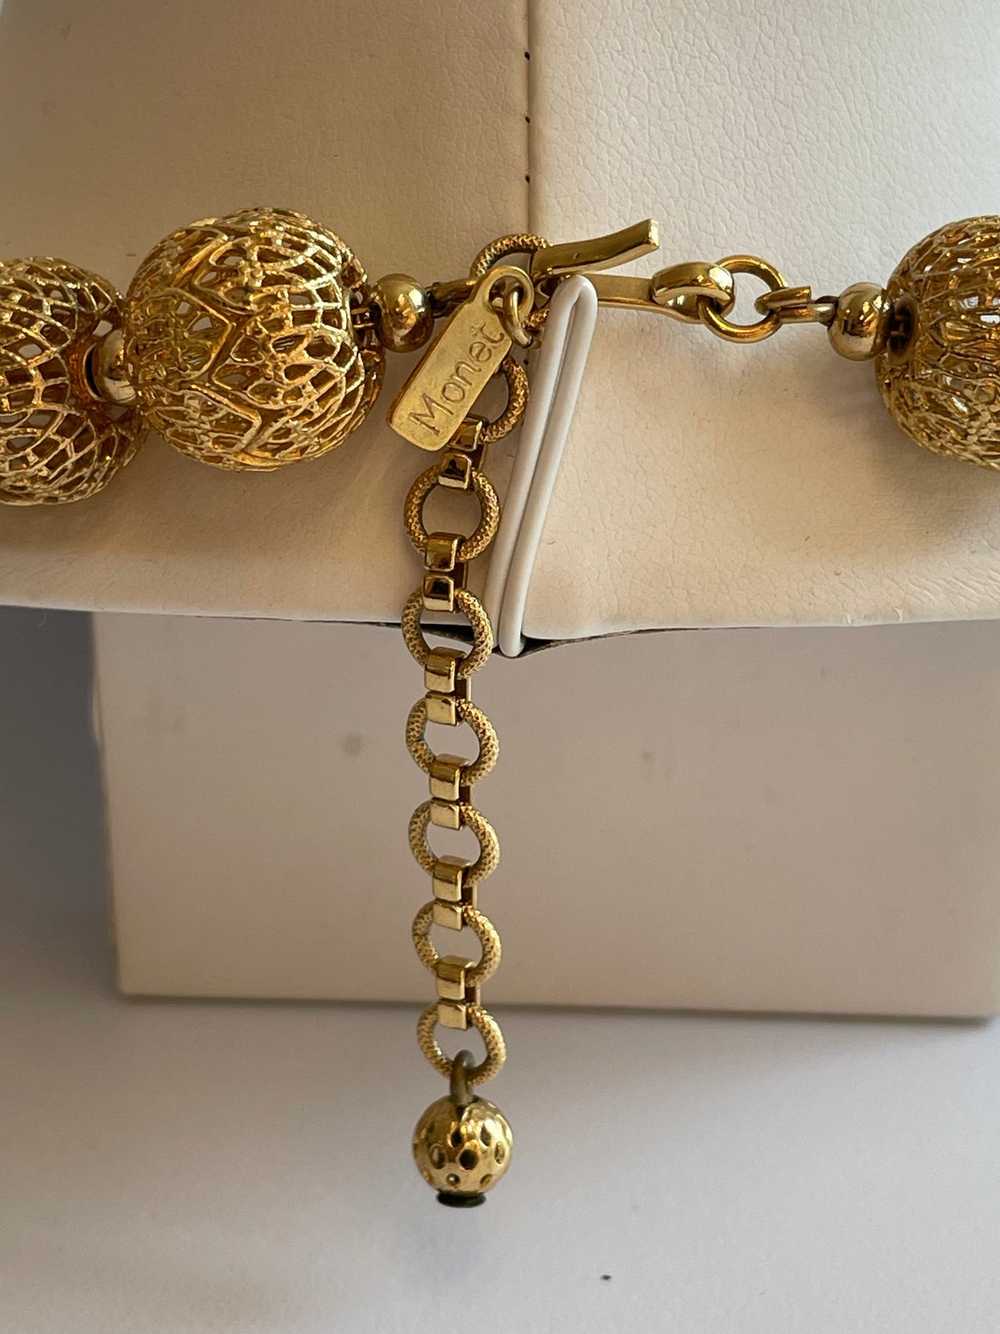 1960’s Monet Gold FiligreeBall Necklace - image 6